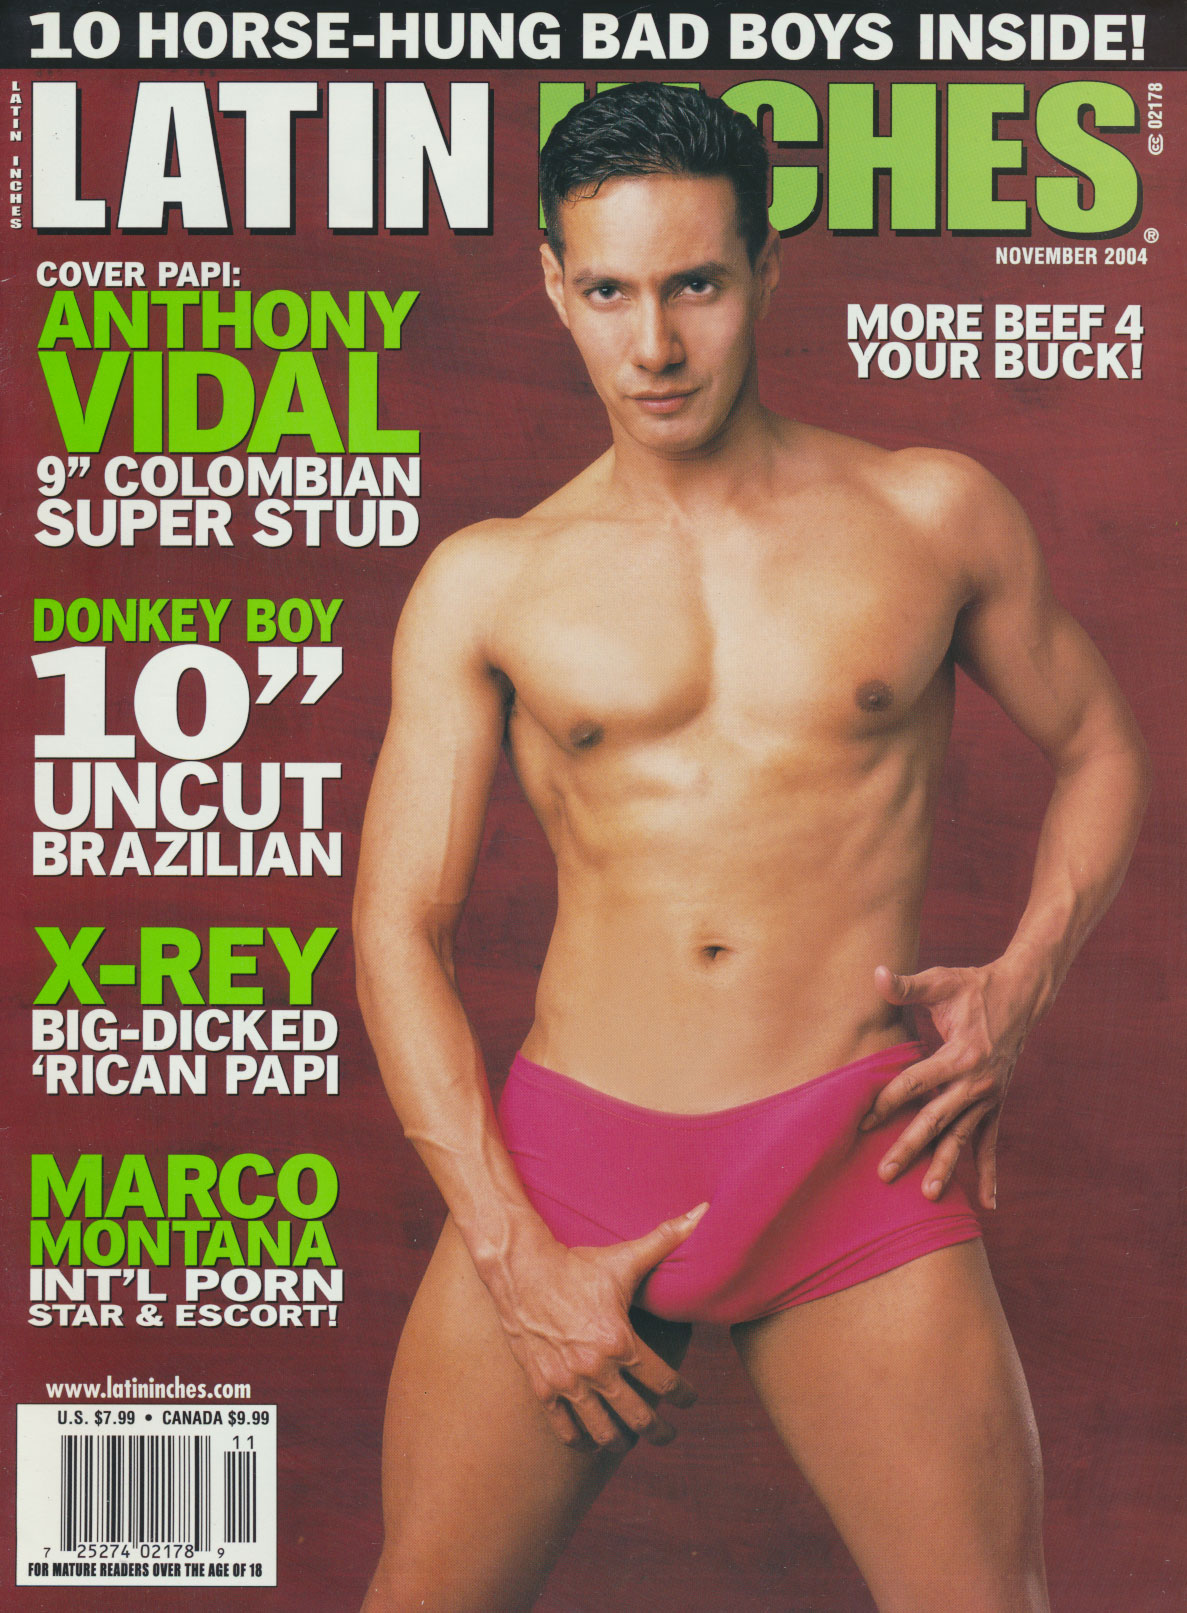 Inches Nov 2004 magazine reviews